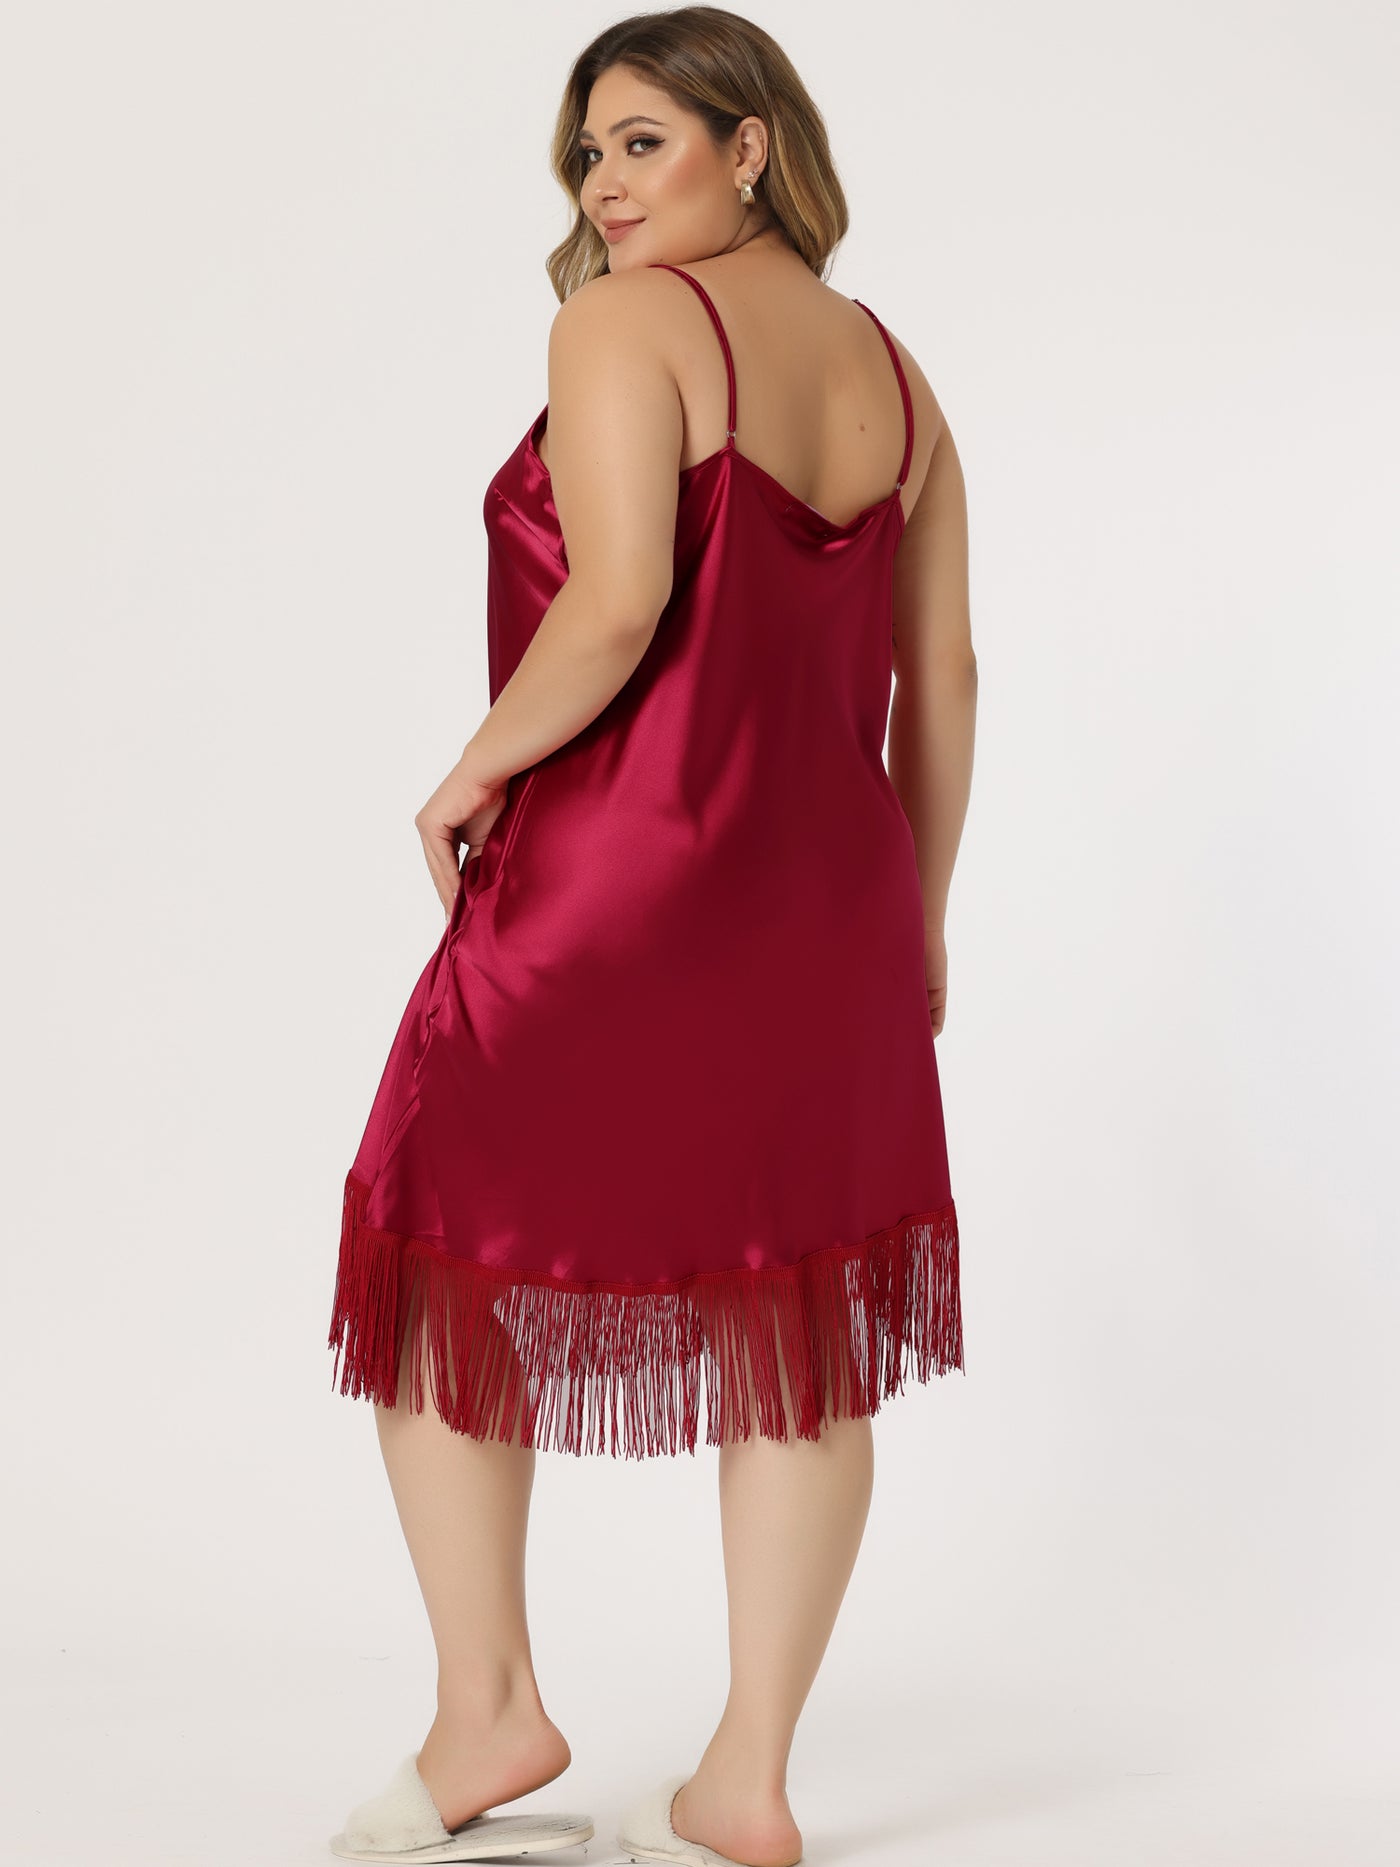 Bublédon Satin Nightgown Lounge Sleepwear Spaghetti Straps Tassel Pajama Dress